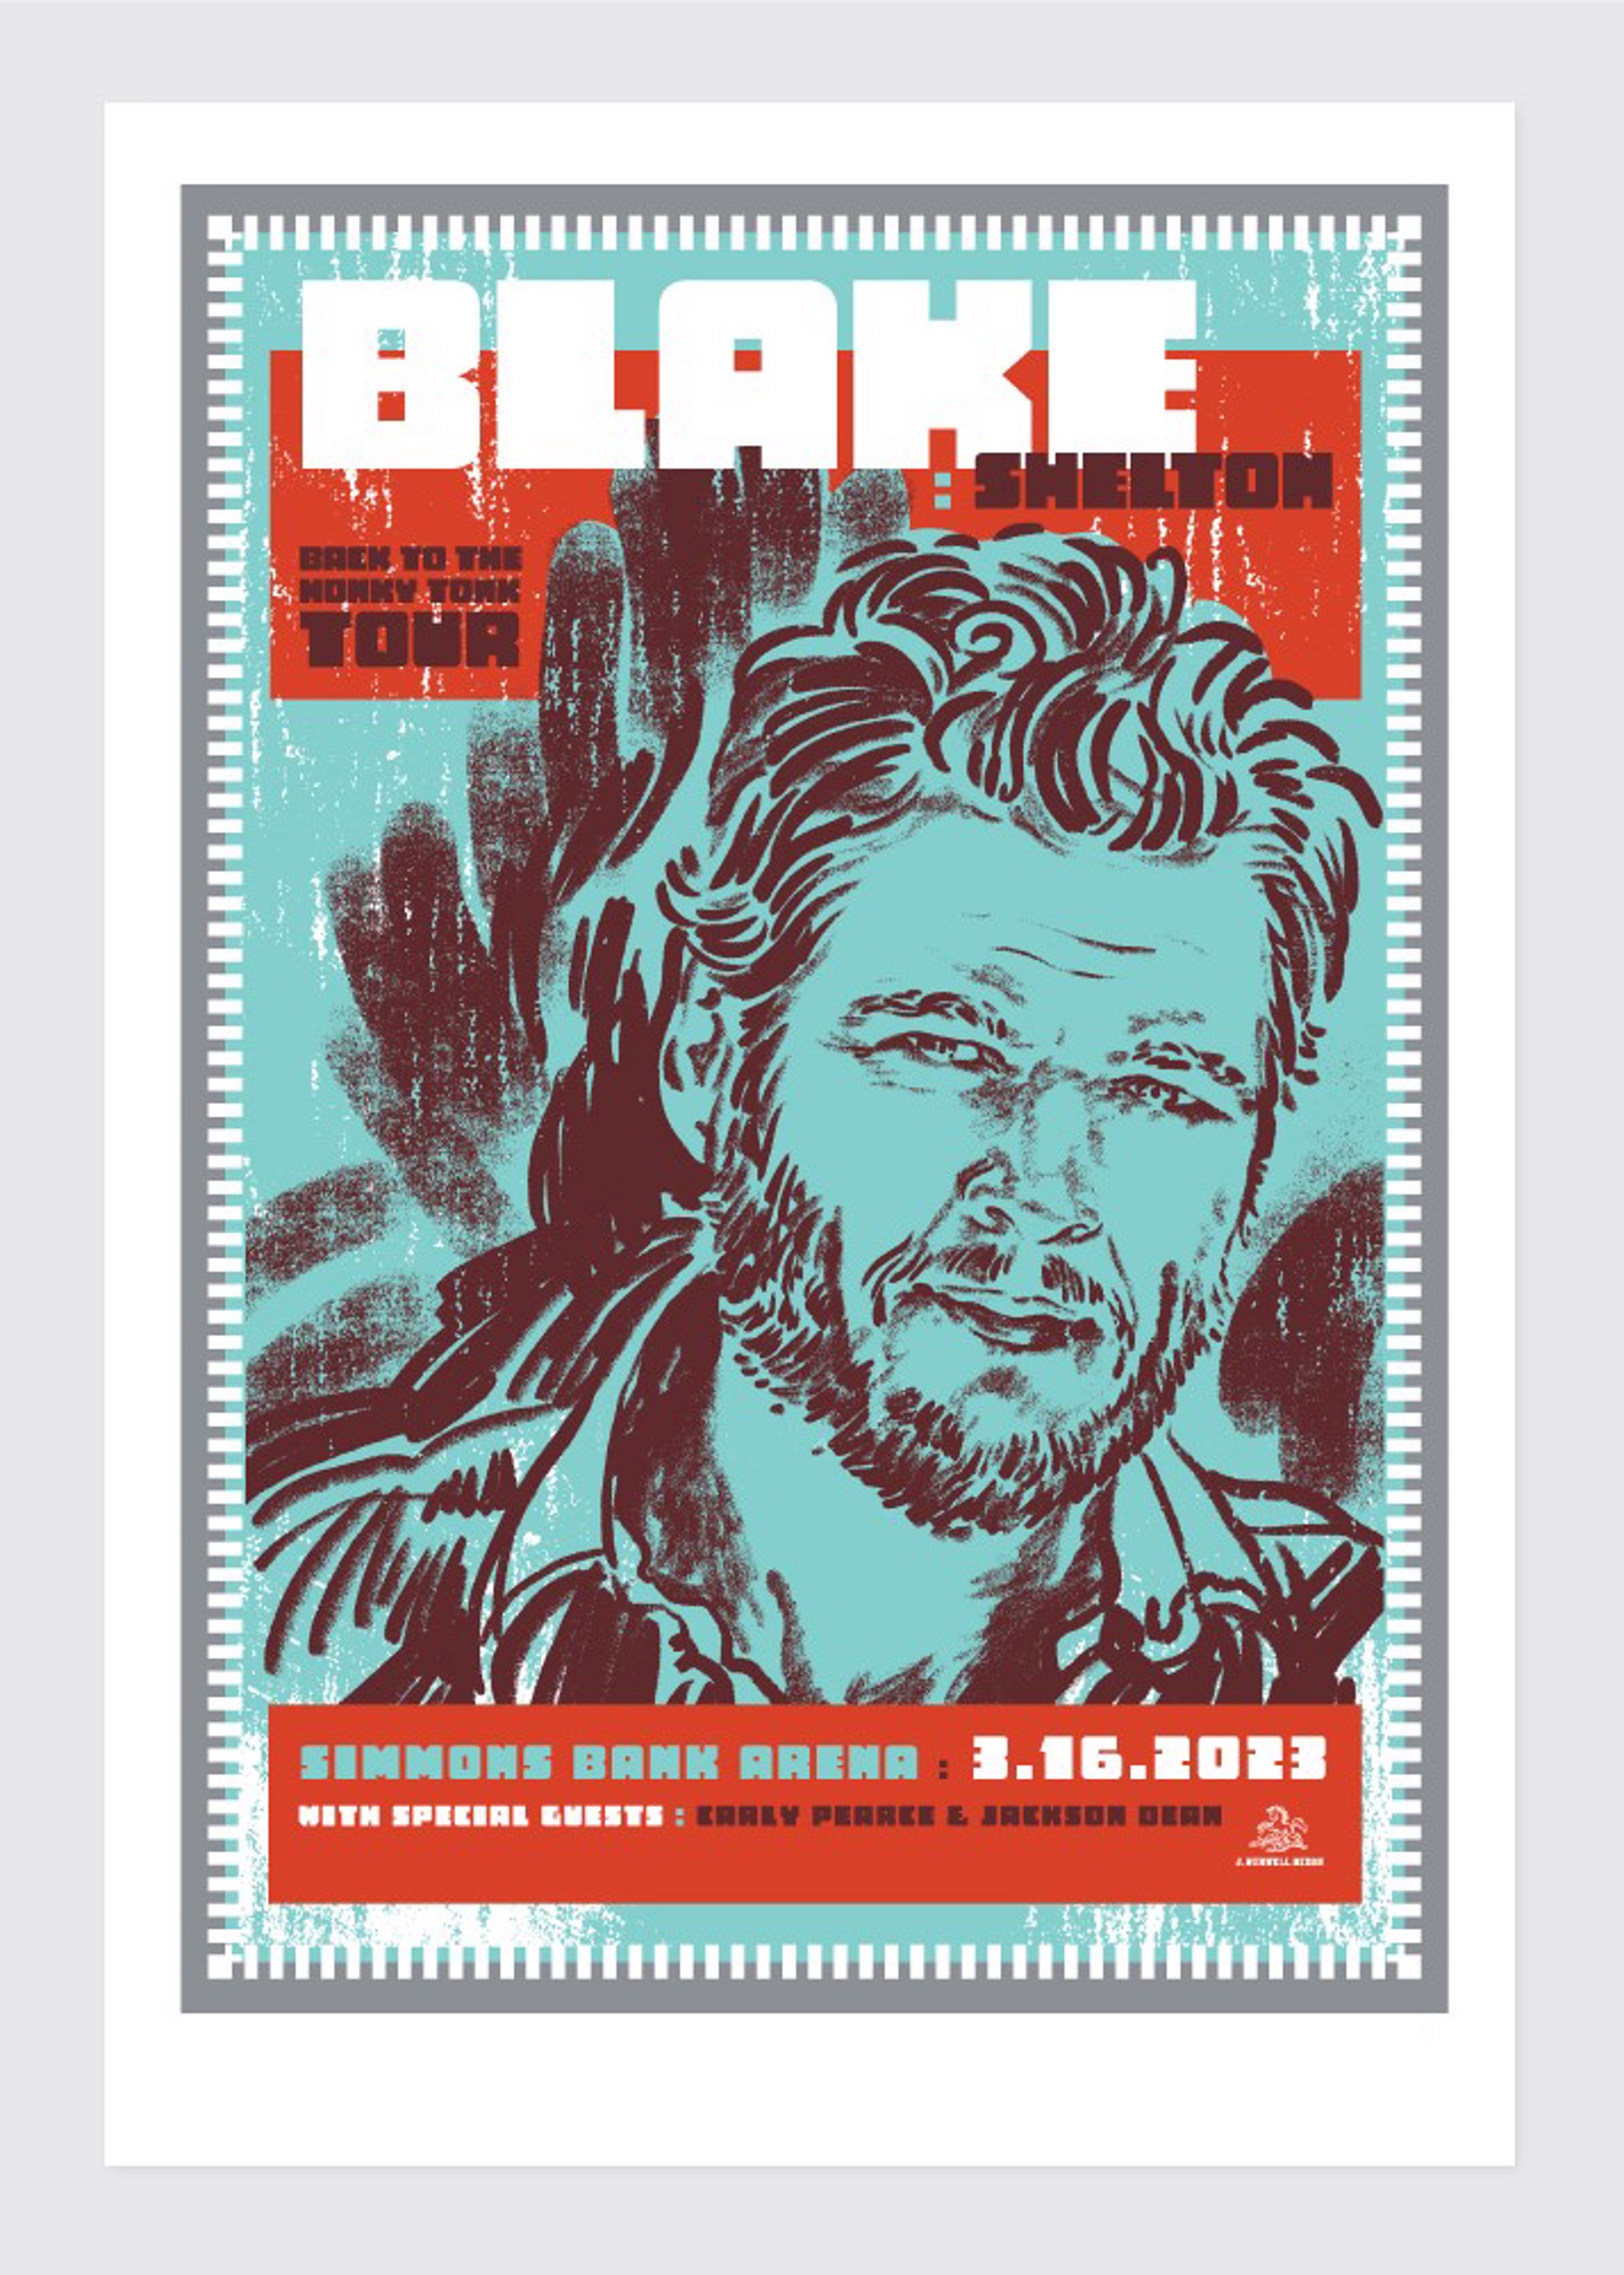 Blake Shelton Concert Poster by Jamie Burwell Mixon